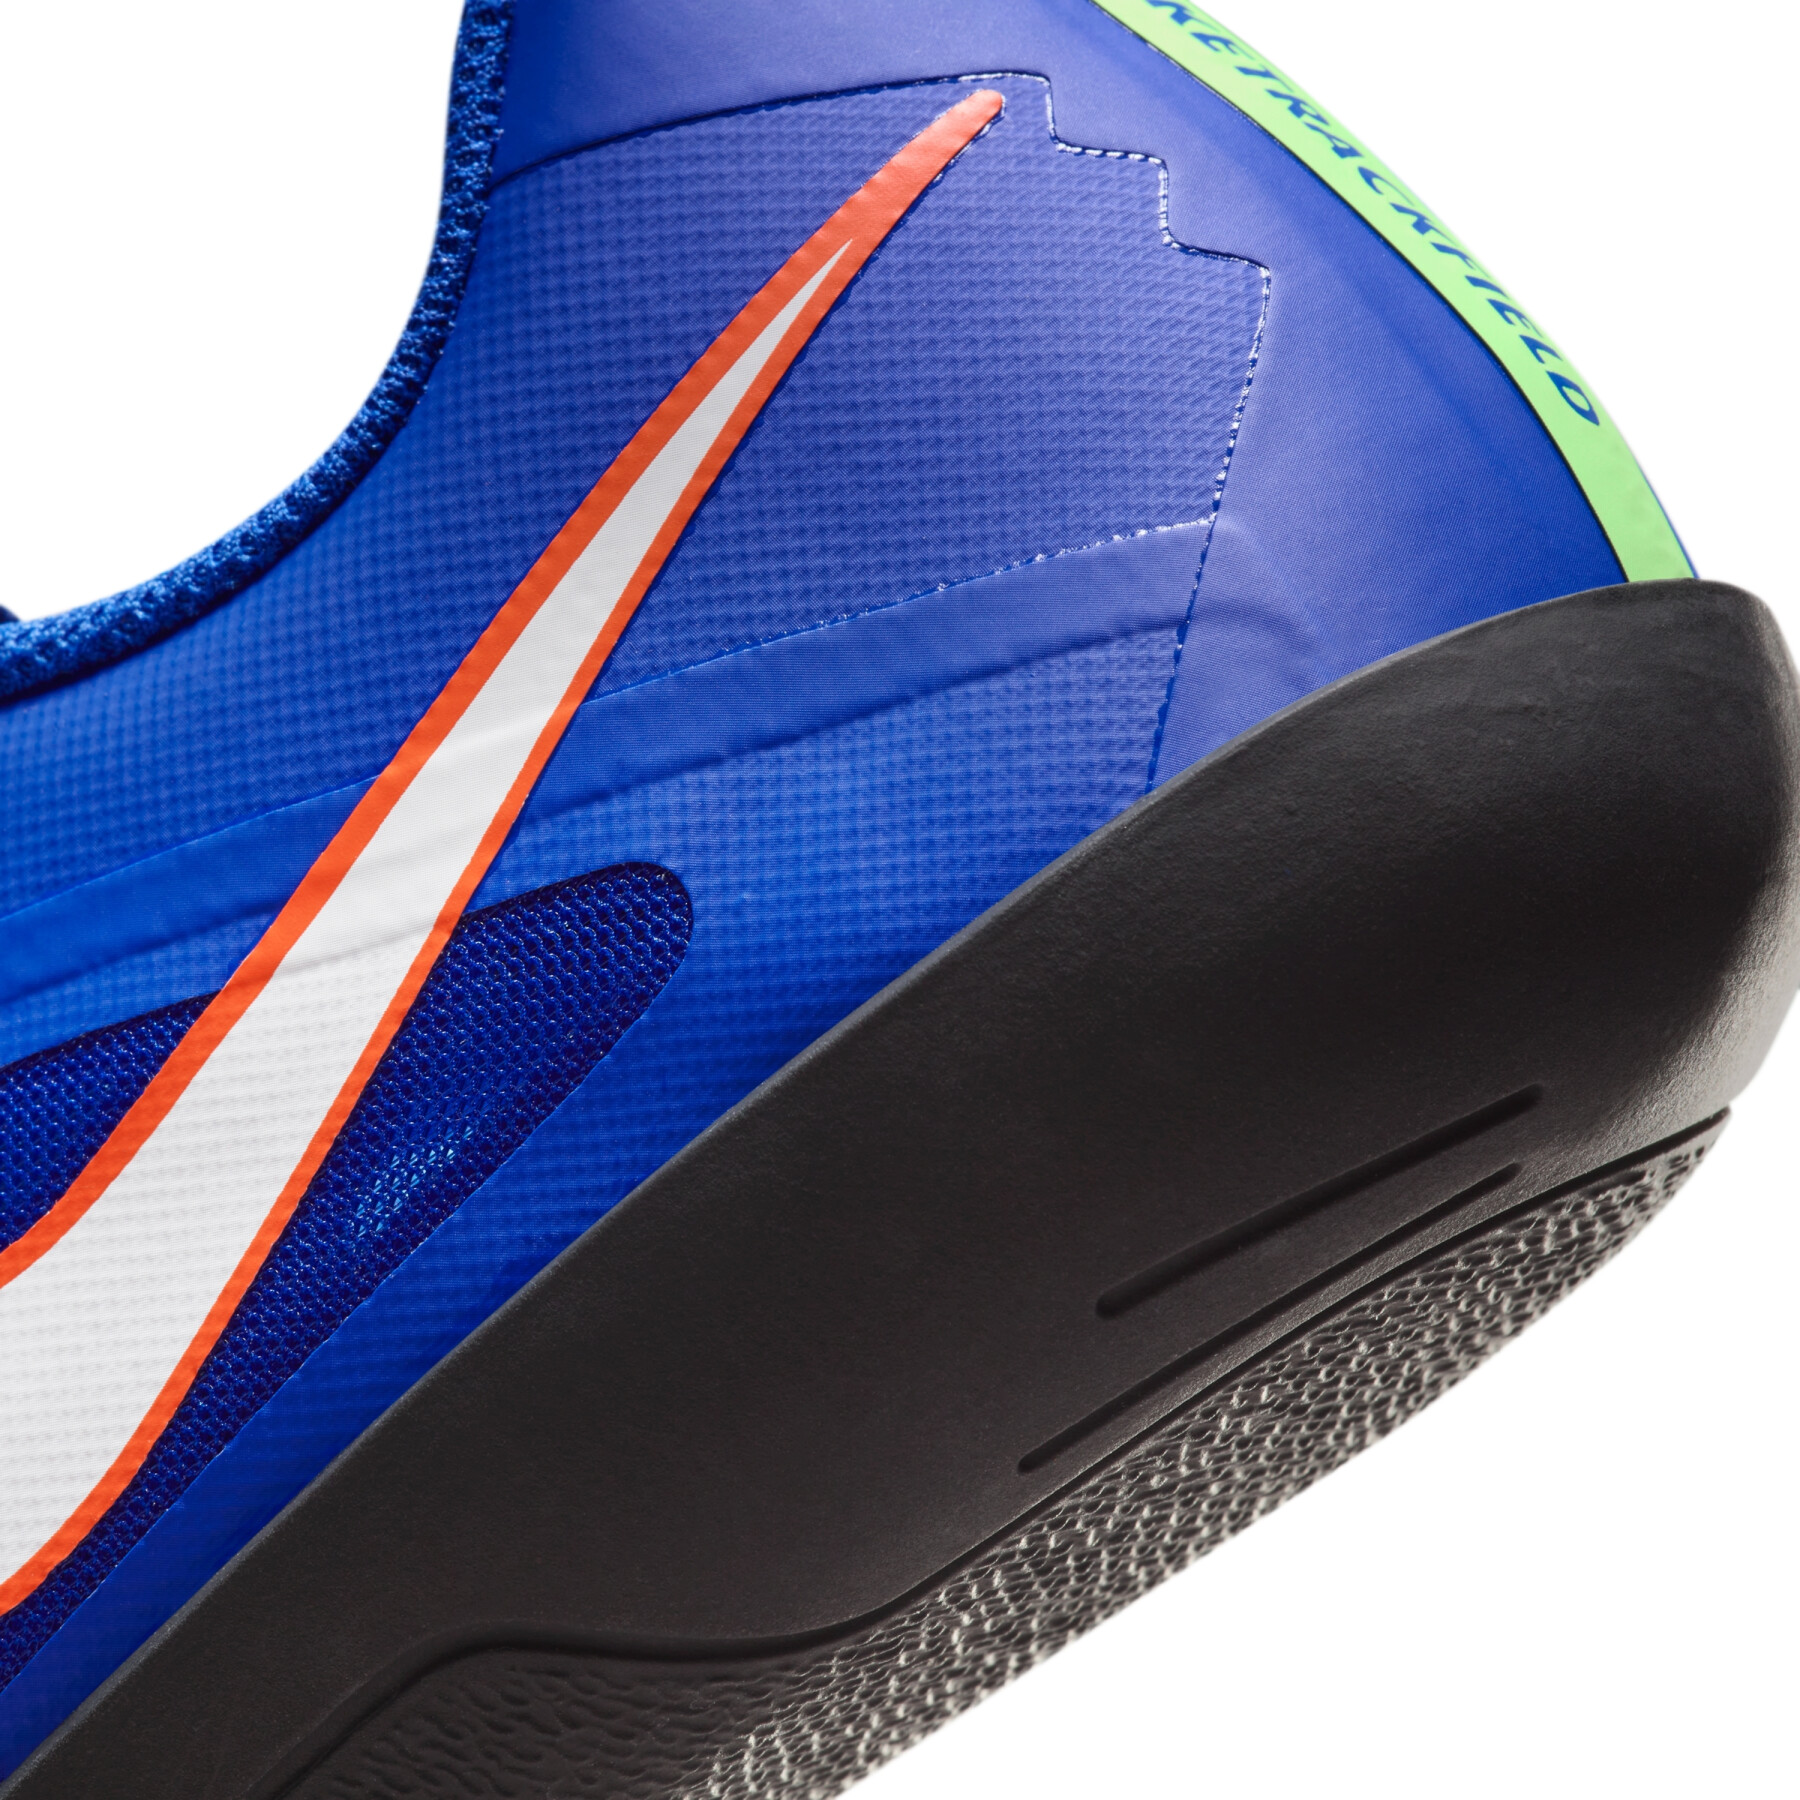 Zapatillas de atletismo Nike Zoom Rival SD 2